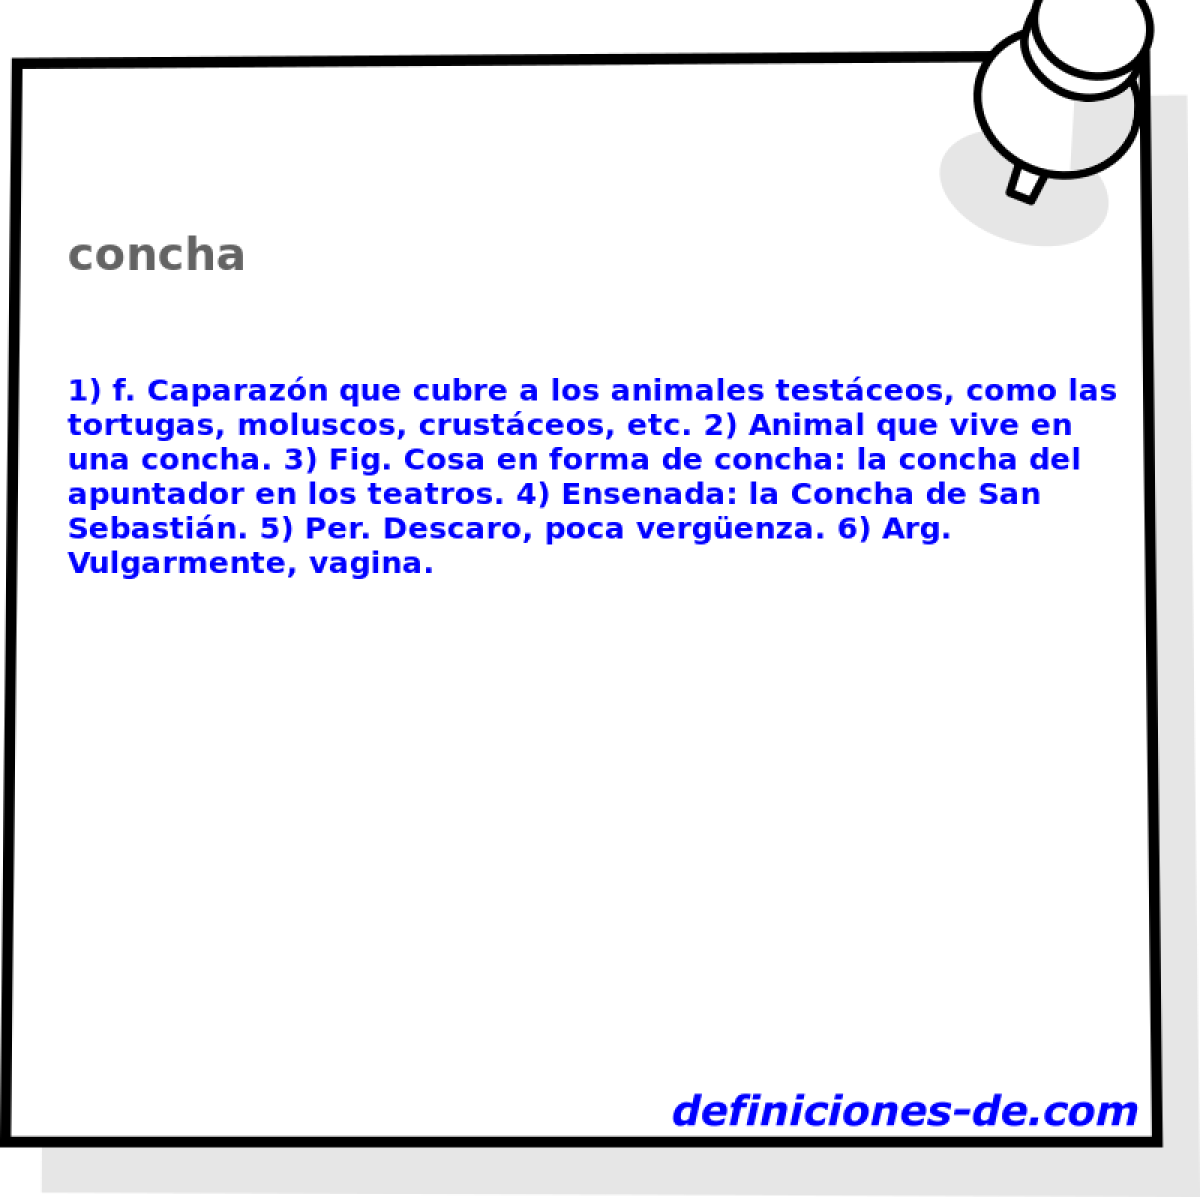 concha 